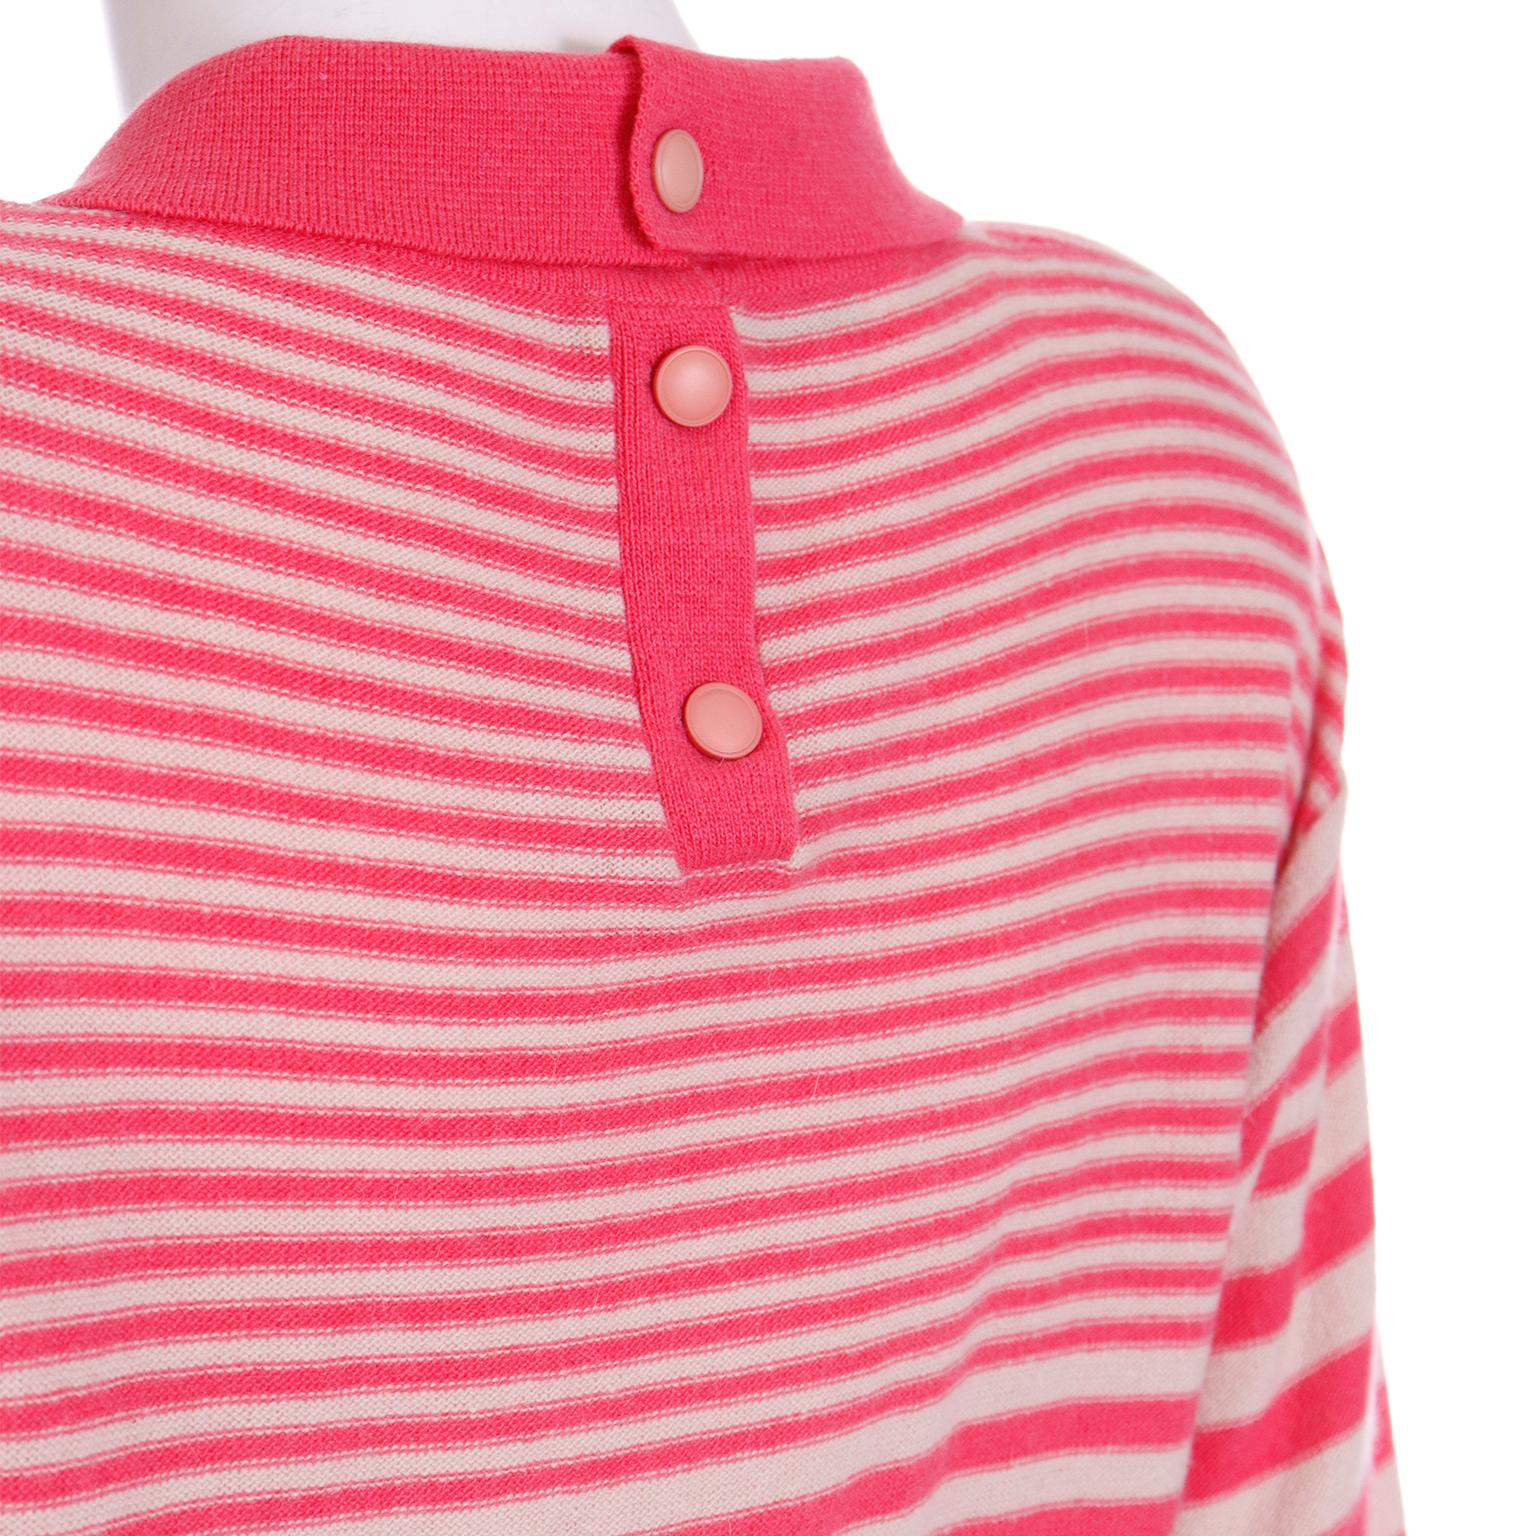 Women's Sonia Rykiel Vintage Pink Striped 1980s Knit Sweater Top w Logo Emblem For Sale